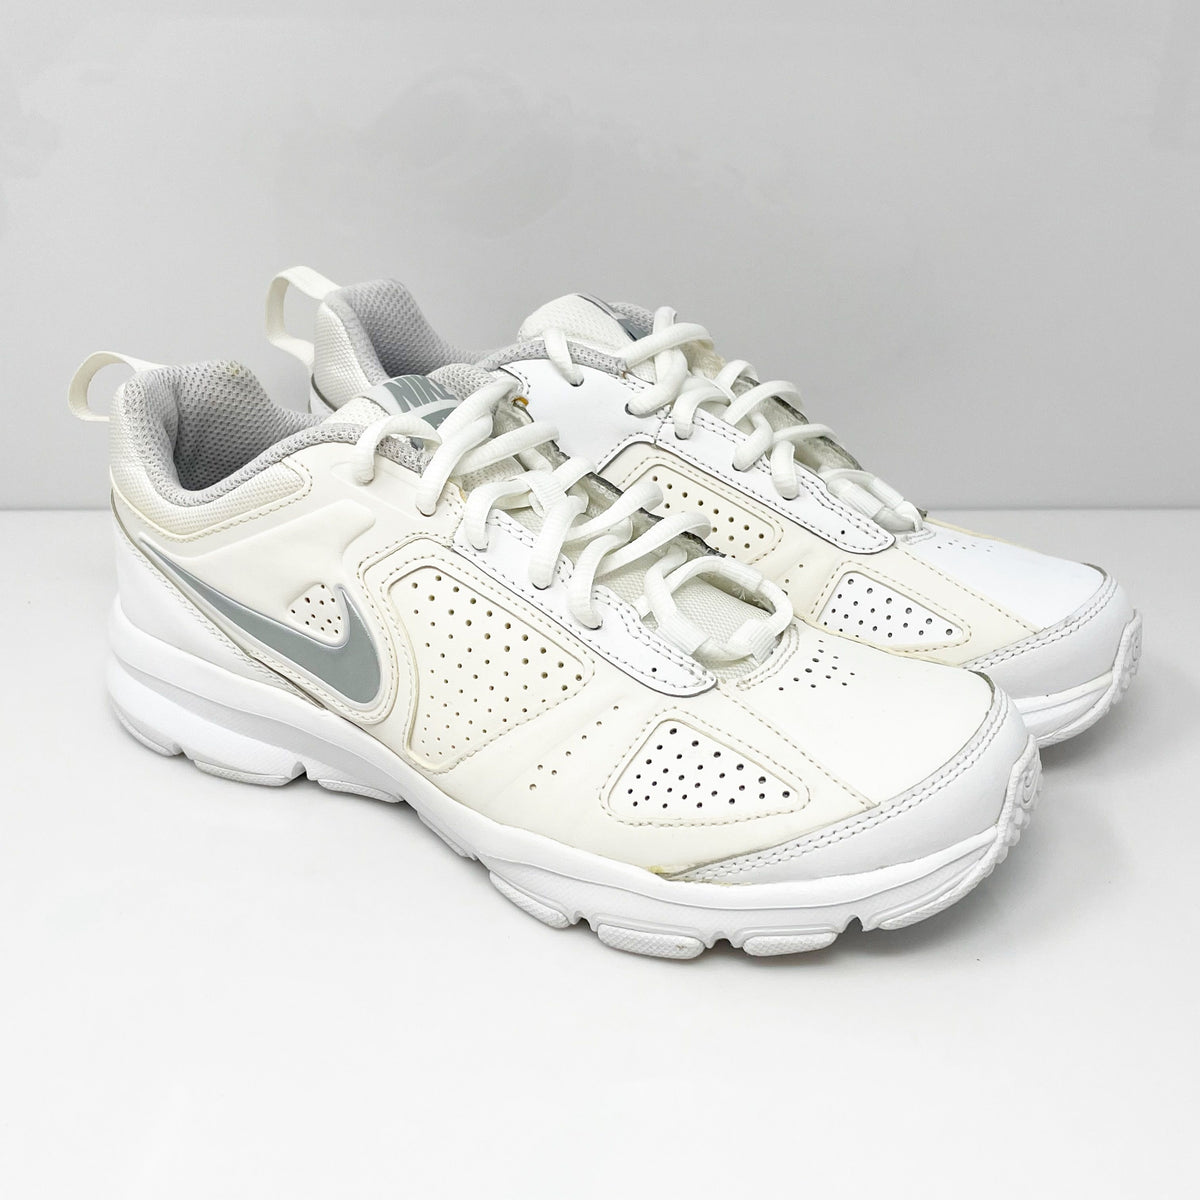 Nike Womens Lite XI 610232-101 White Casual Shoes Sneakers Size